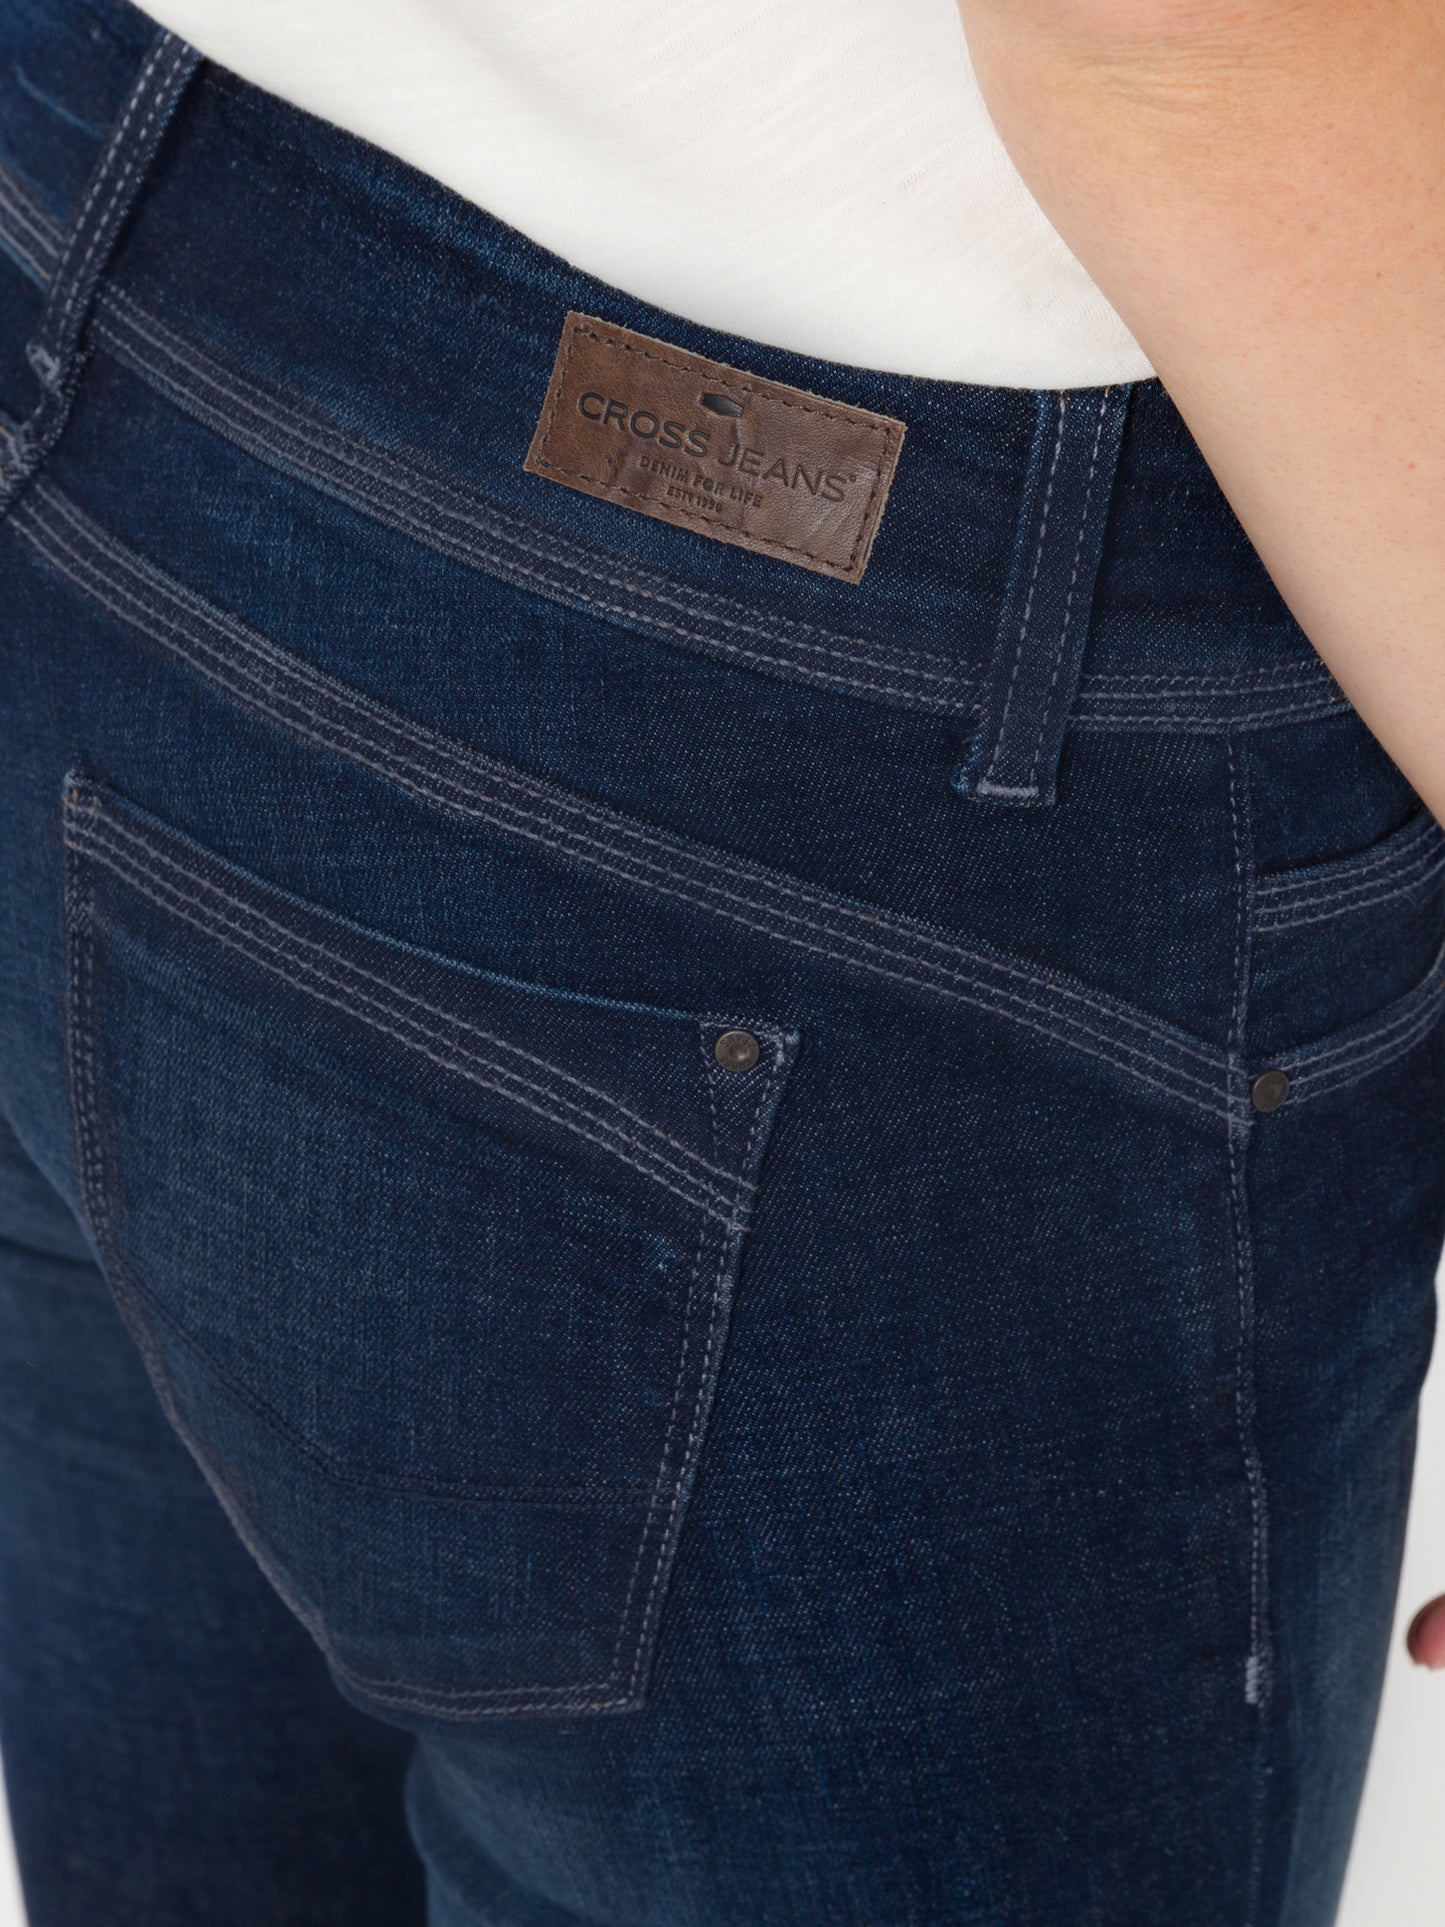 Loie women's jeans regular fit mid waist straight leg dark blue